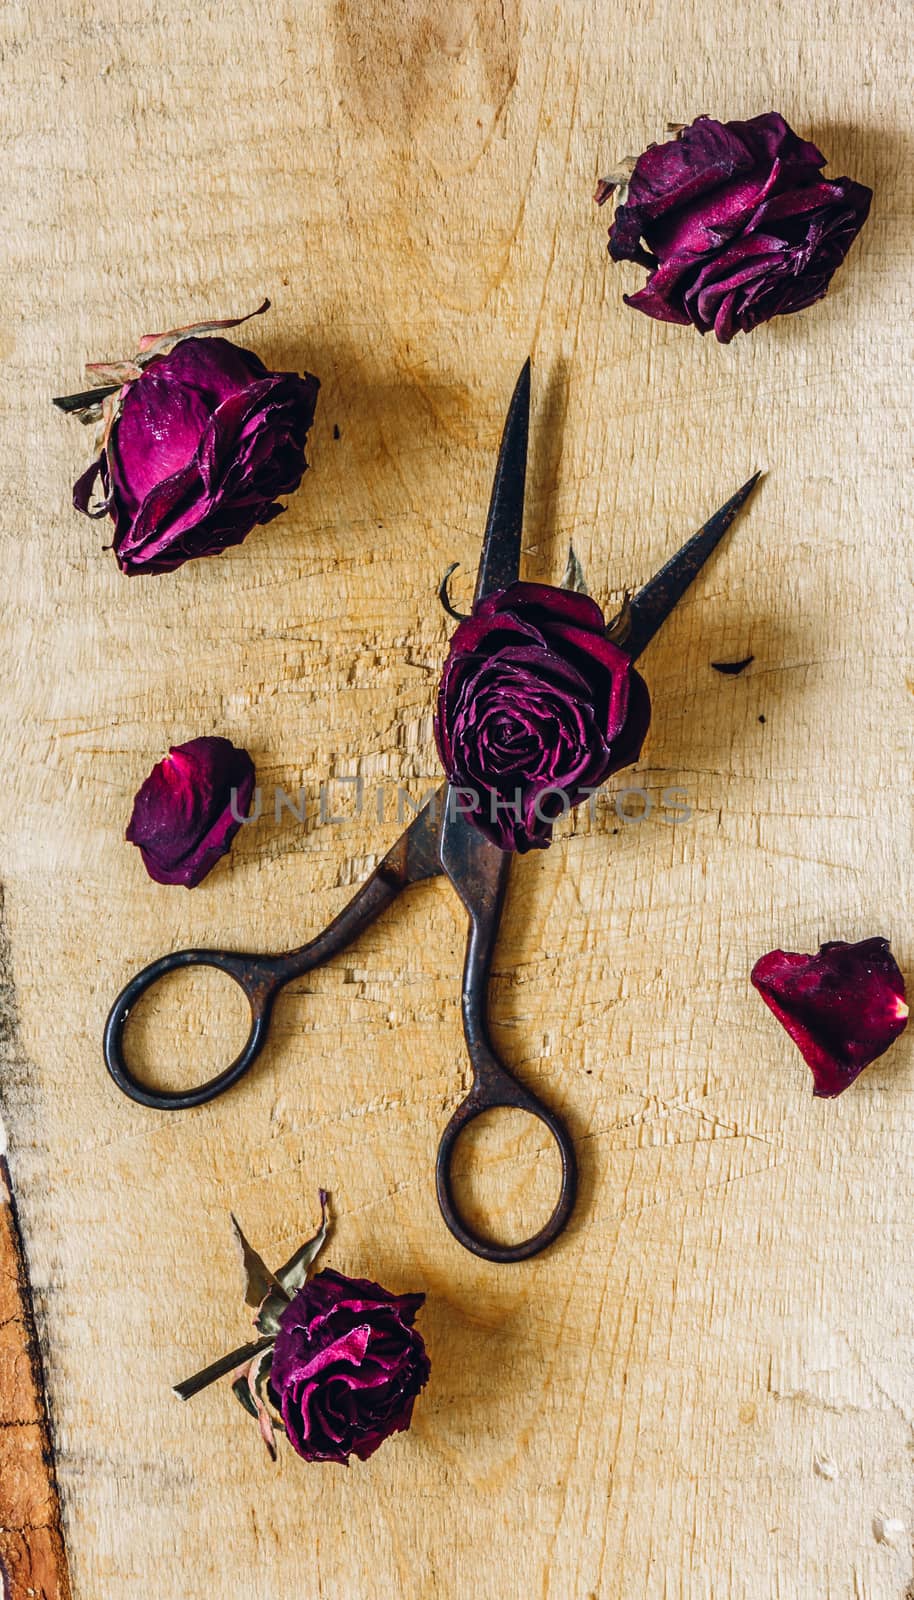 Scissors with Rosebuds. by Seva_blsv